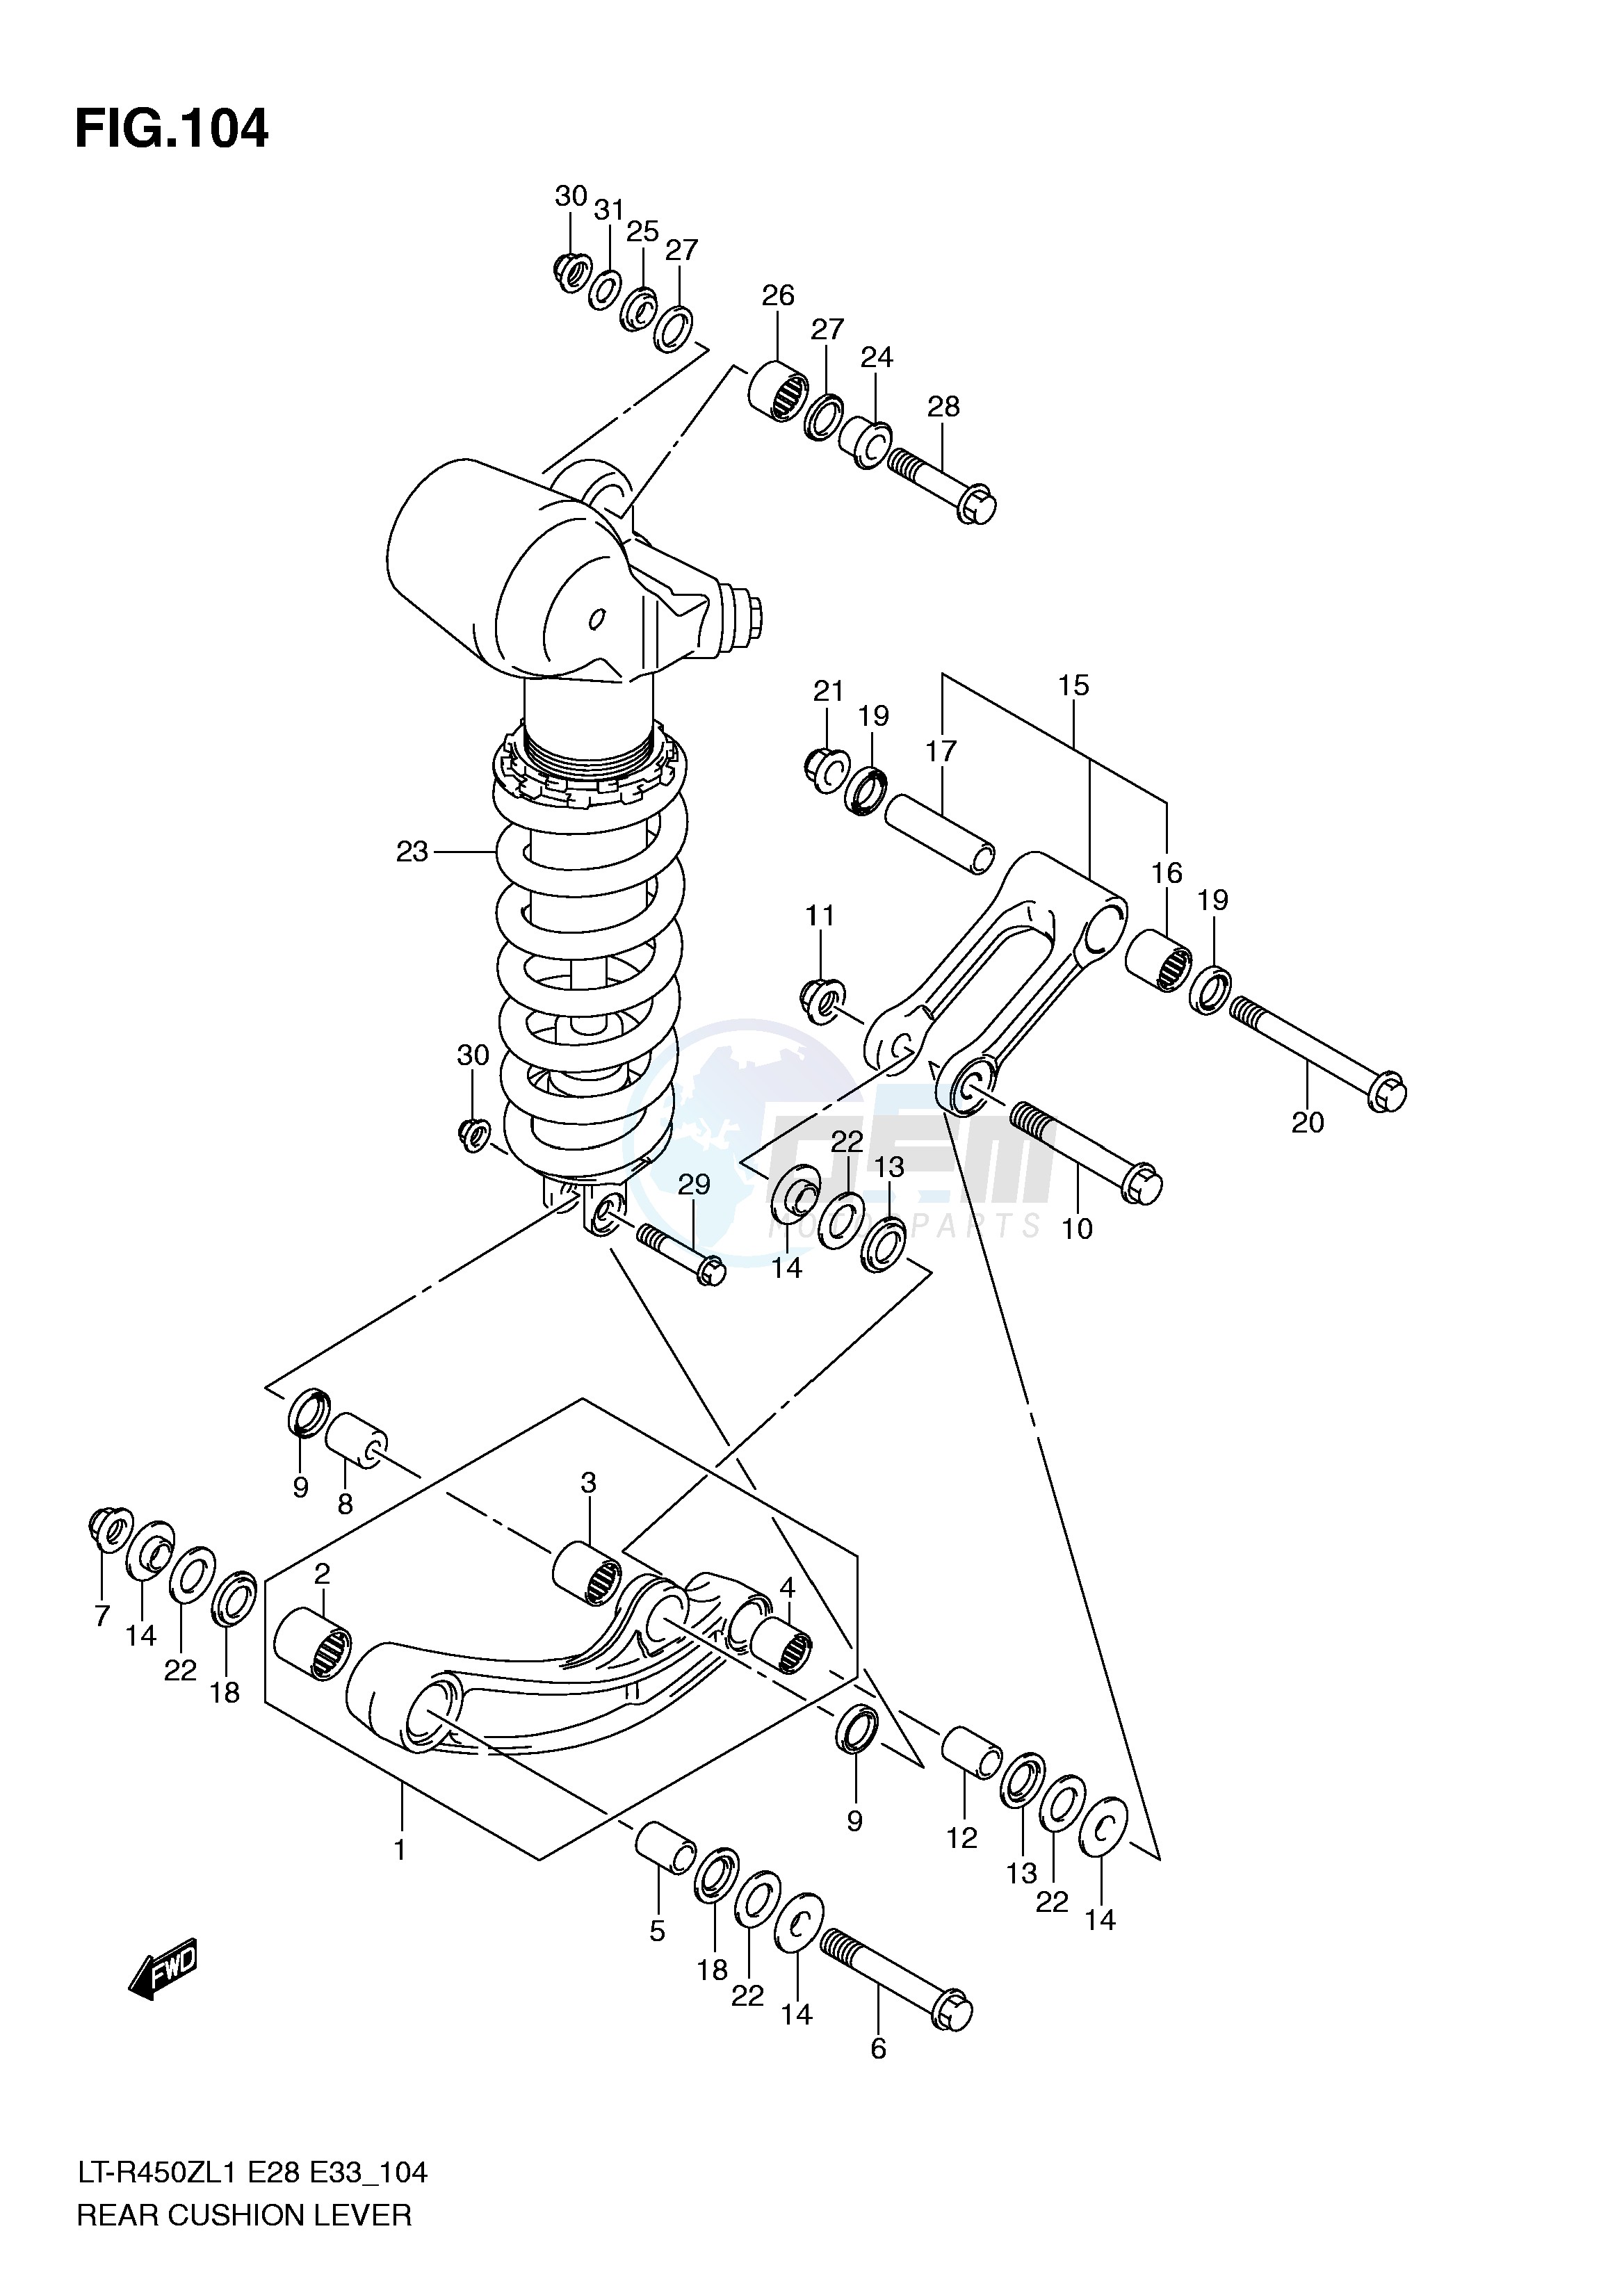 REAR CUSHION LEVER (LT-R450ZL1 E33) blueprint